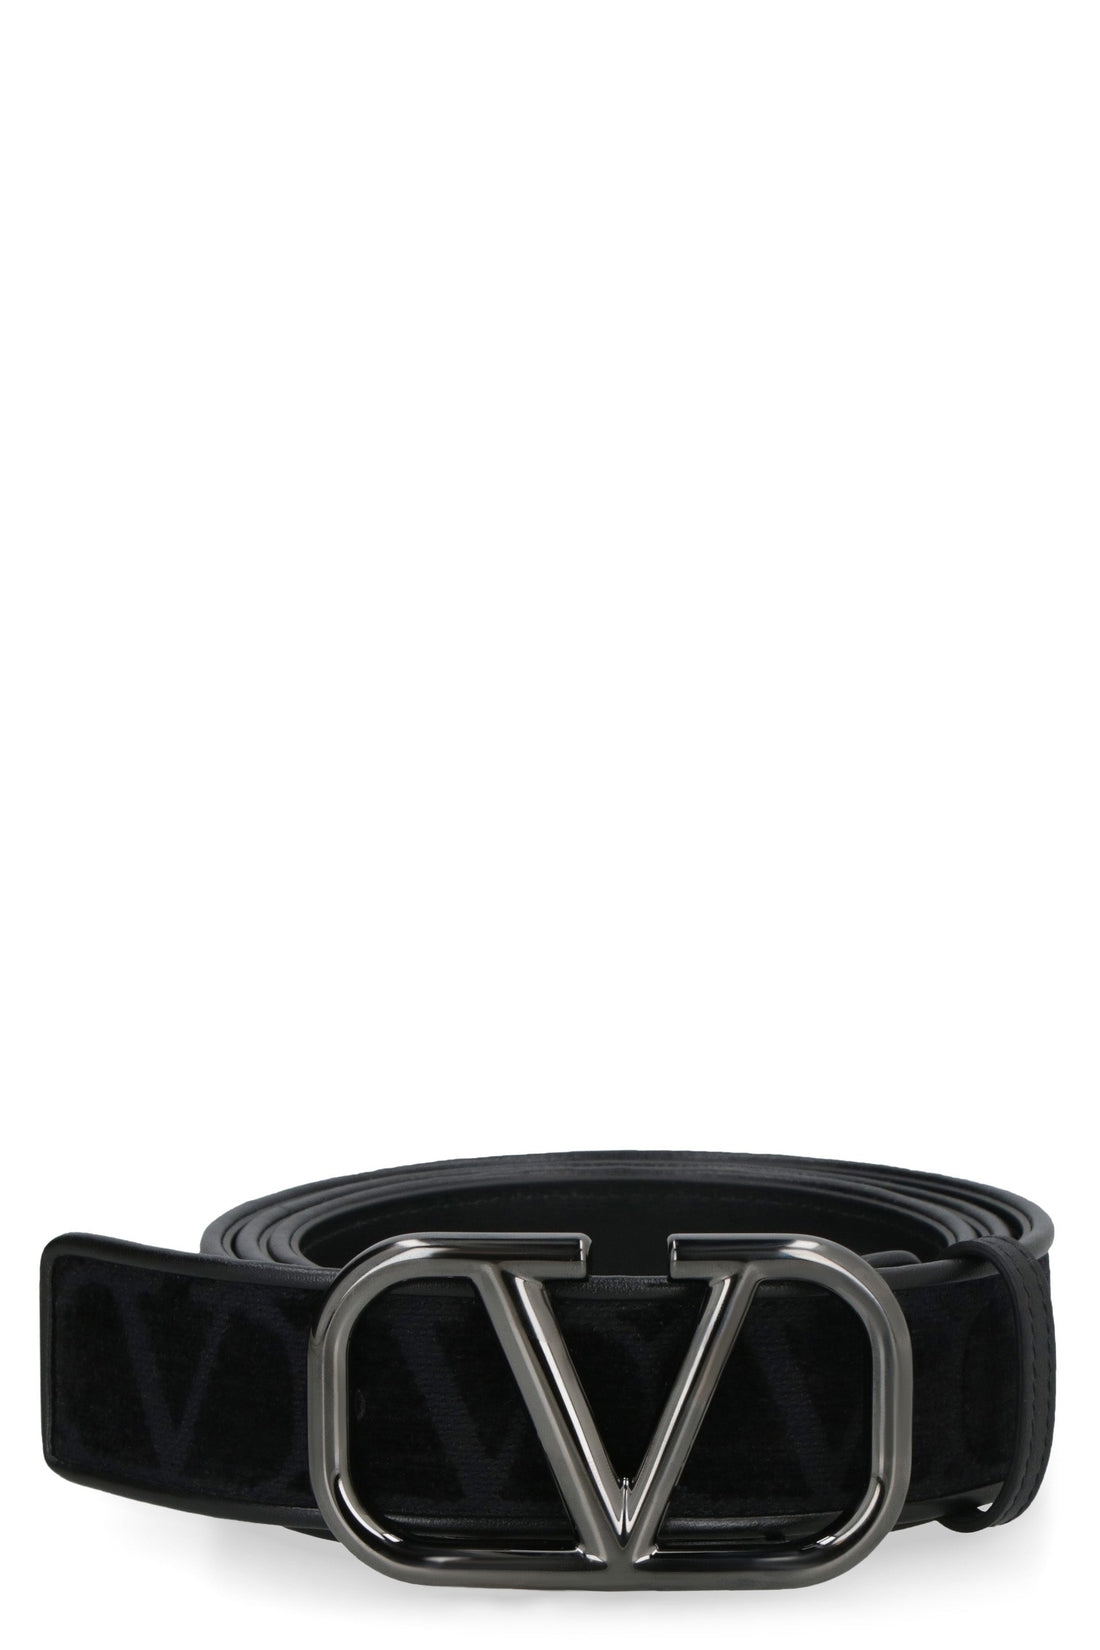 Valentino-OUTLET-SALE-Leather belt-ARCHIVIST